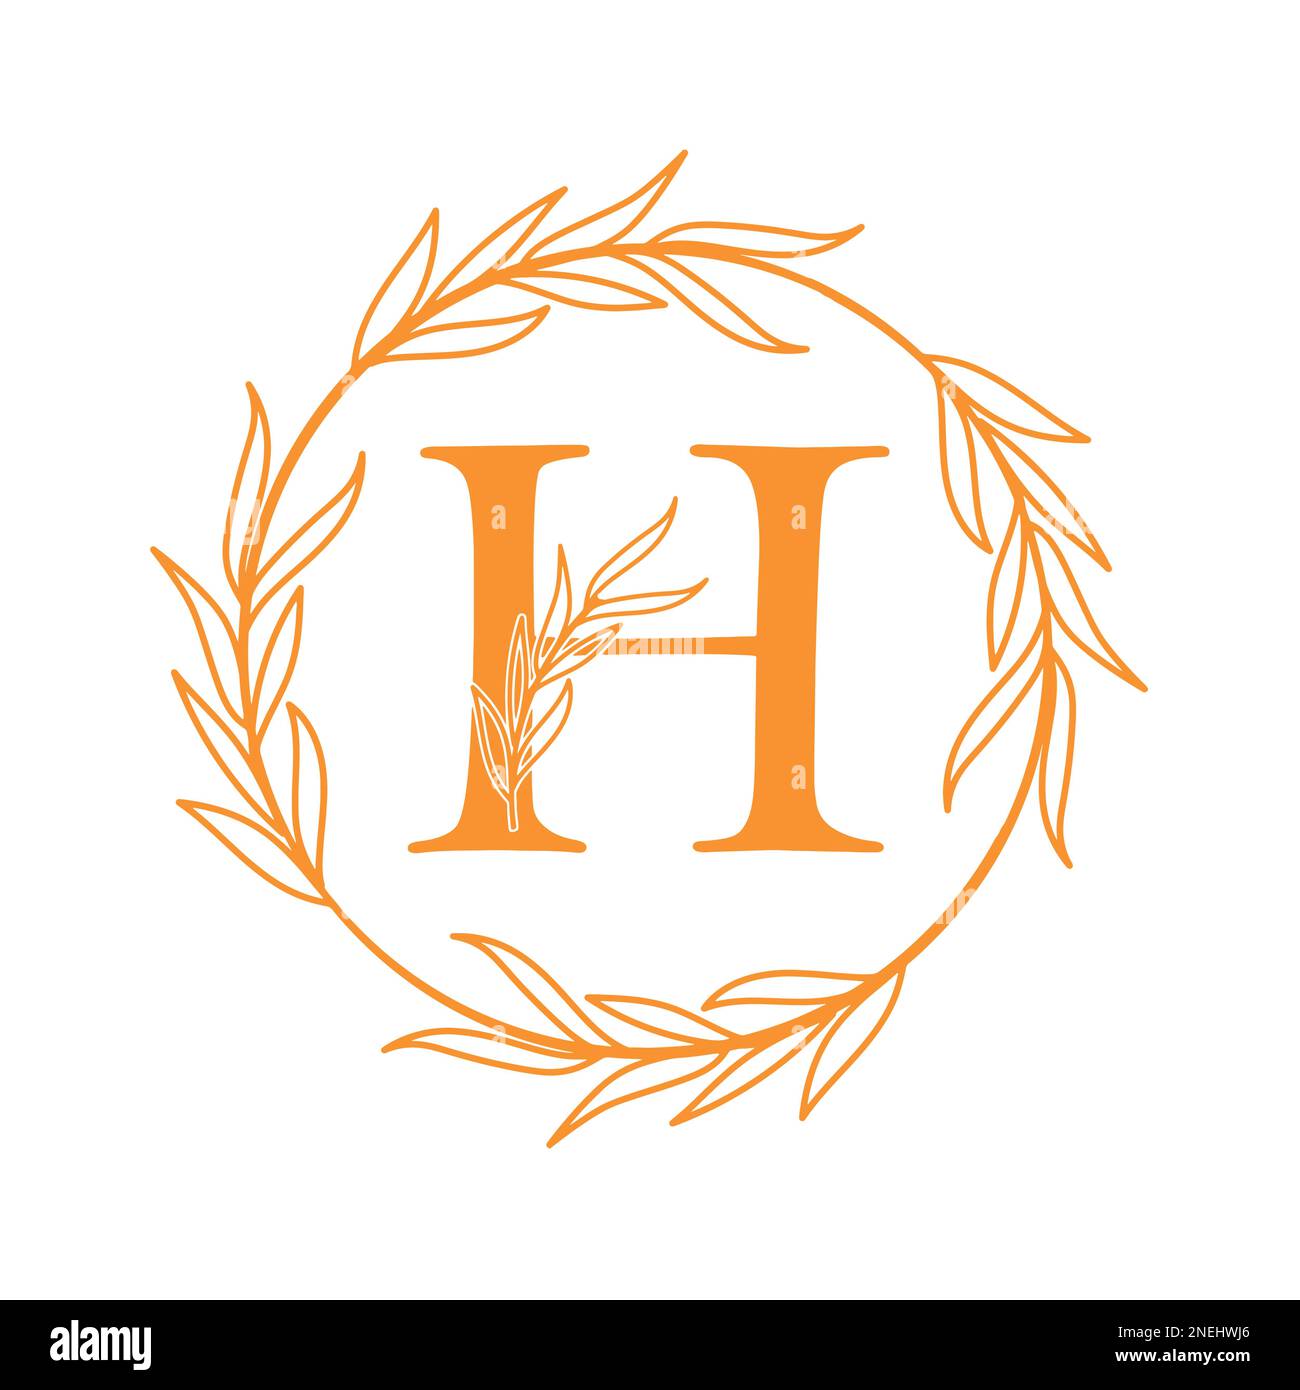 Web Monogram H letter logo icon Stock Vector